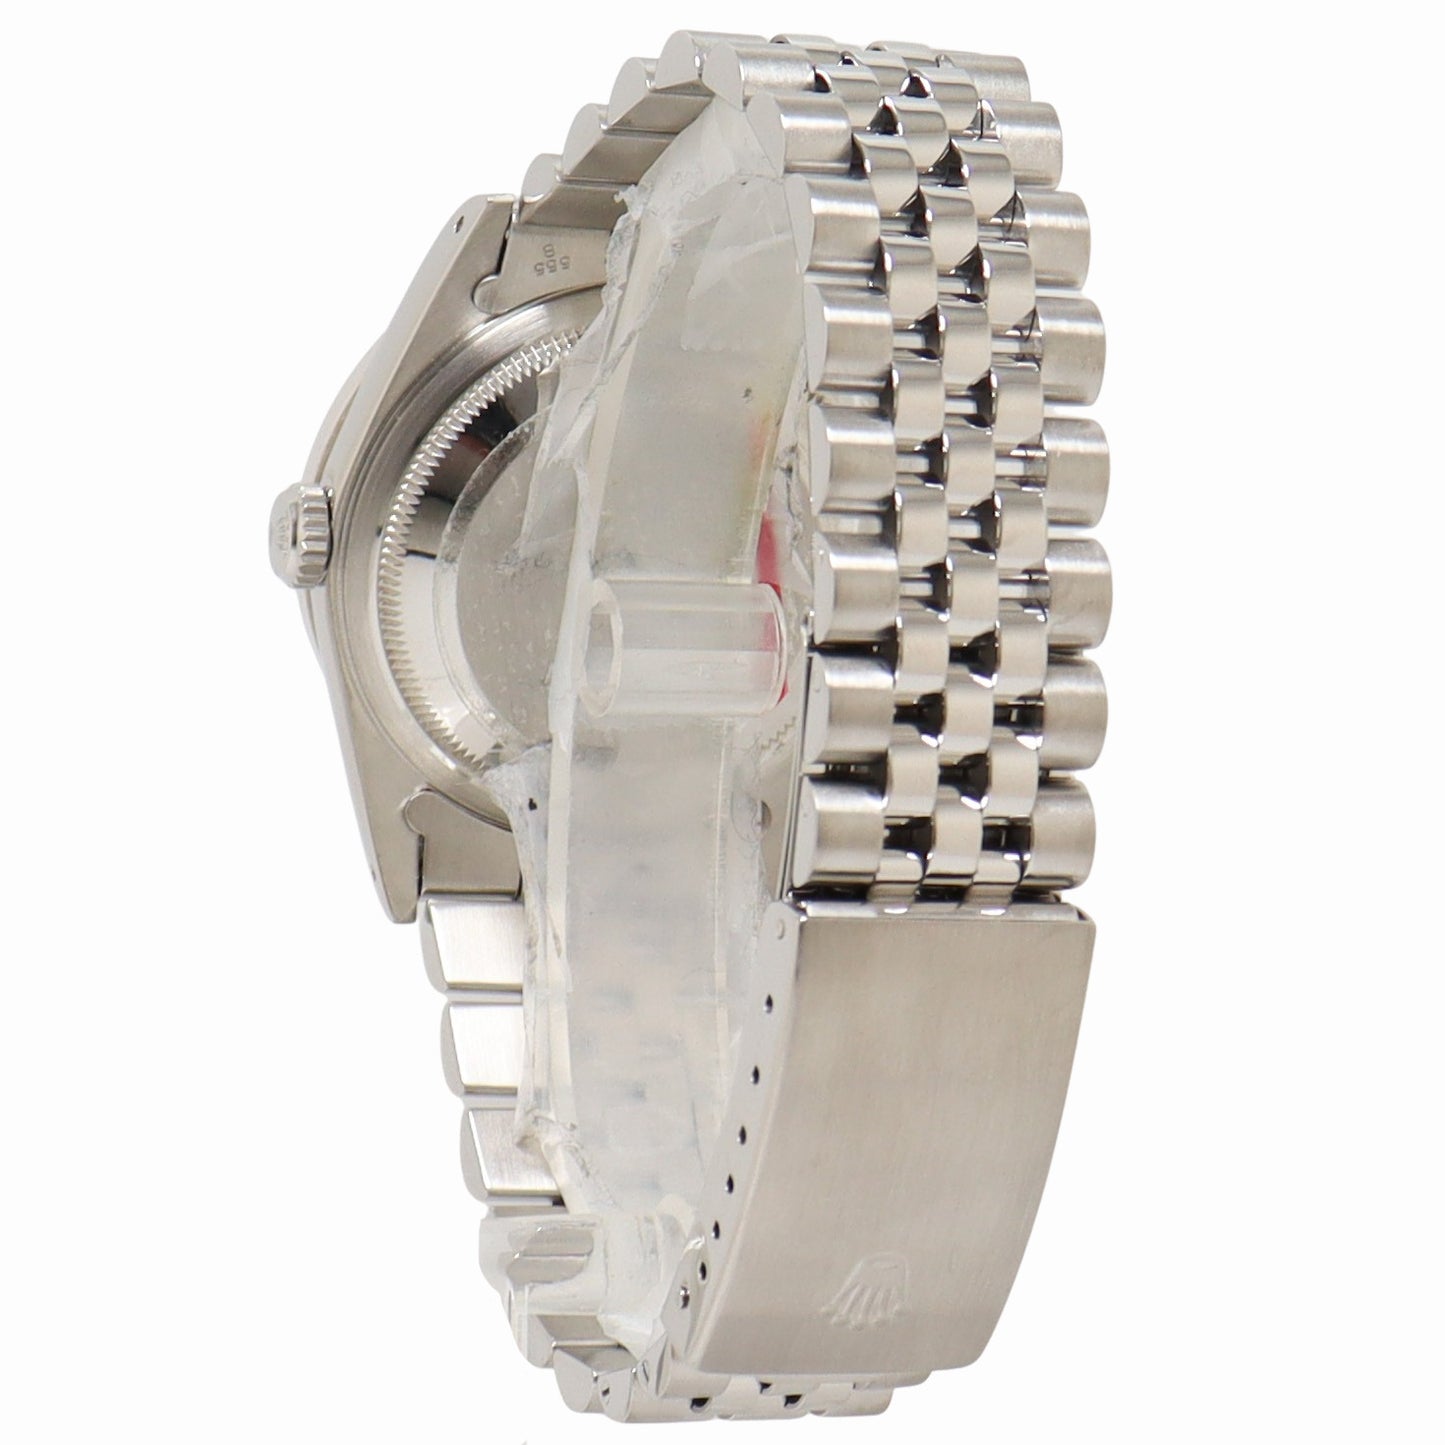 Rolex Datejust 36 Stainless Steel Custom White MOP Diamond Dial Watch Reference# 16234 - Happy Jewelers Fine Jewelry Lifetime Warranty